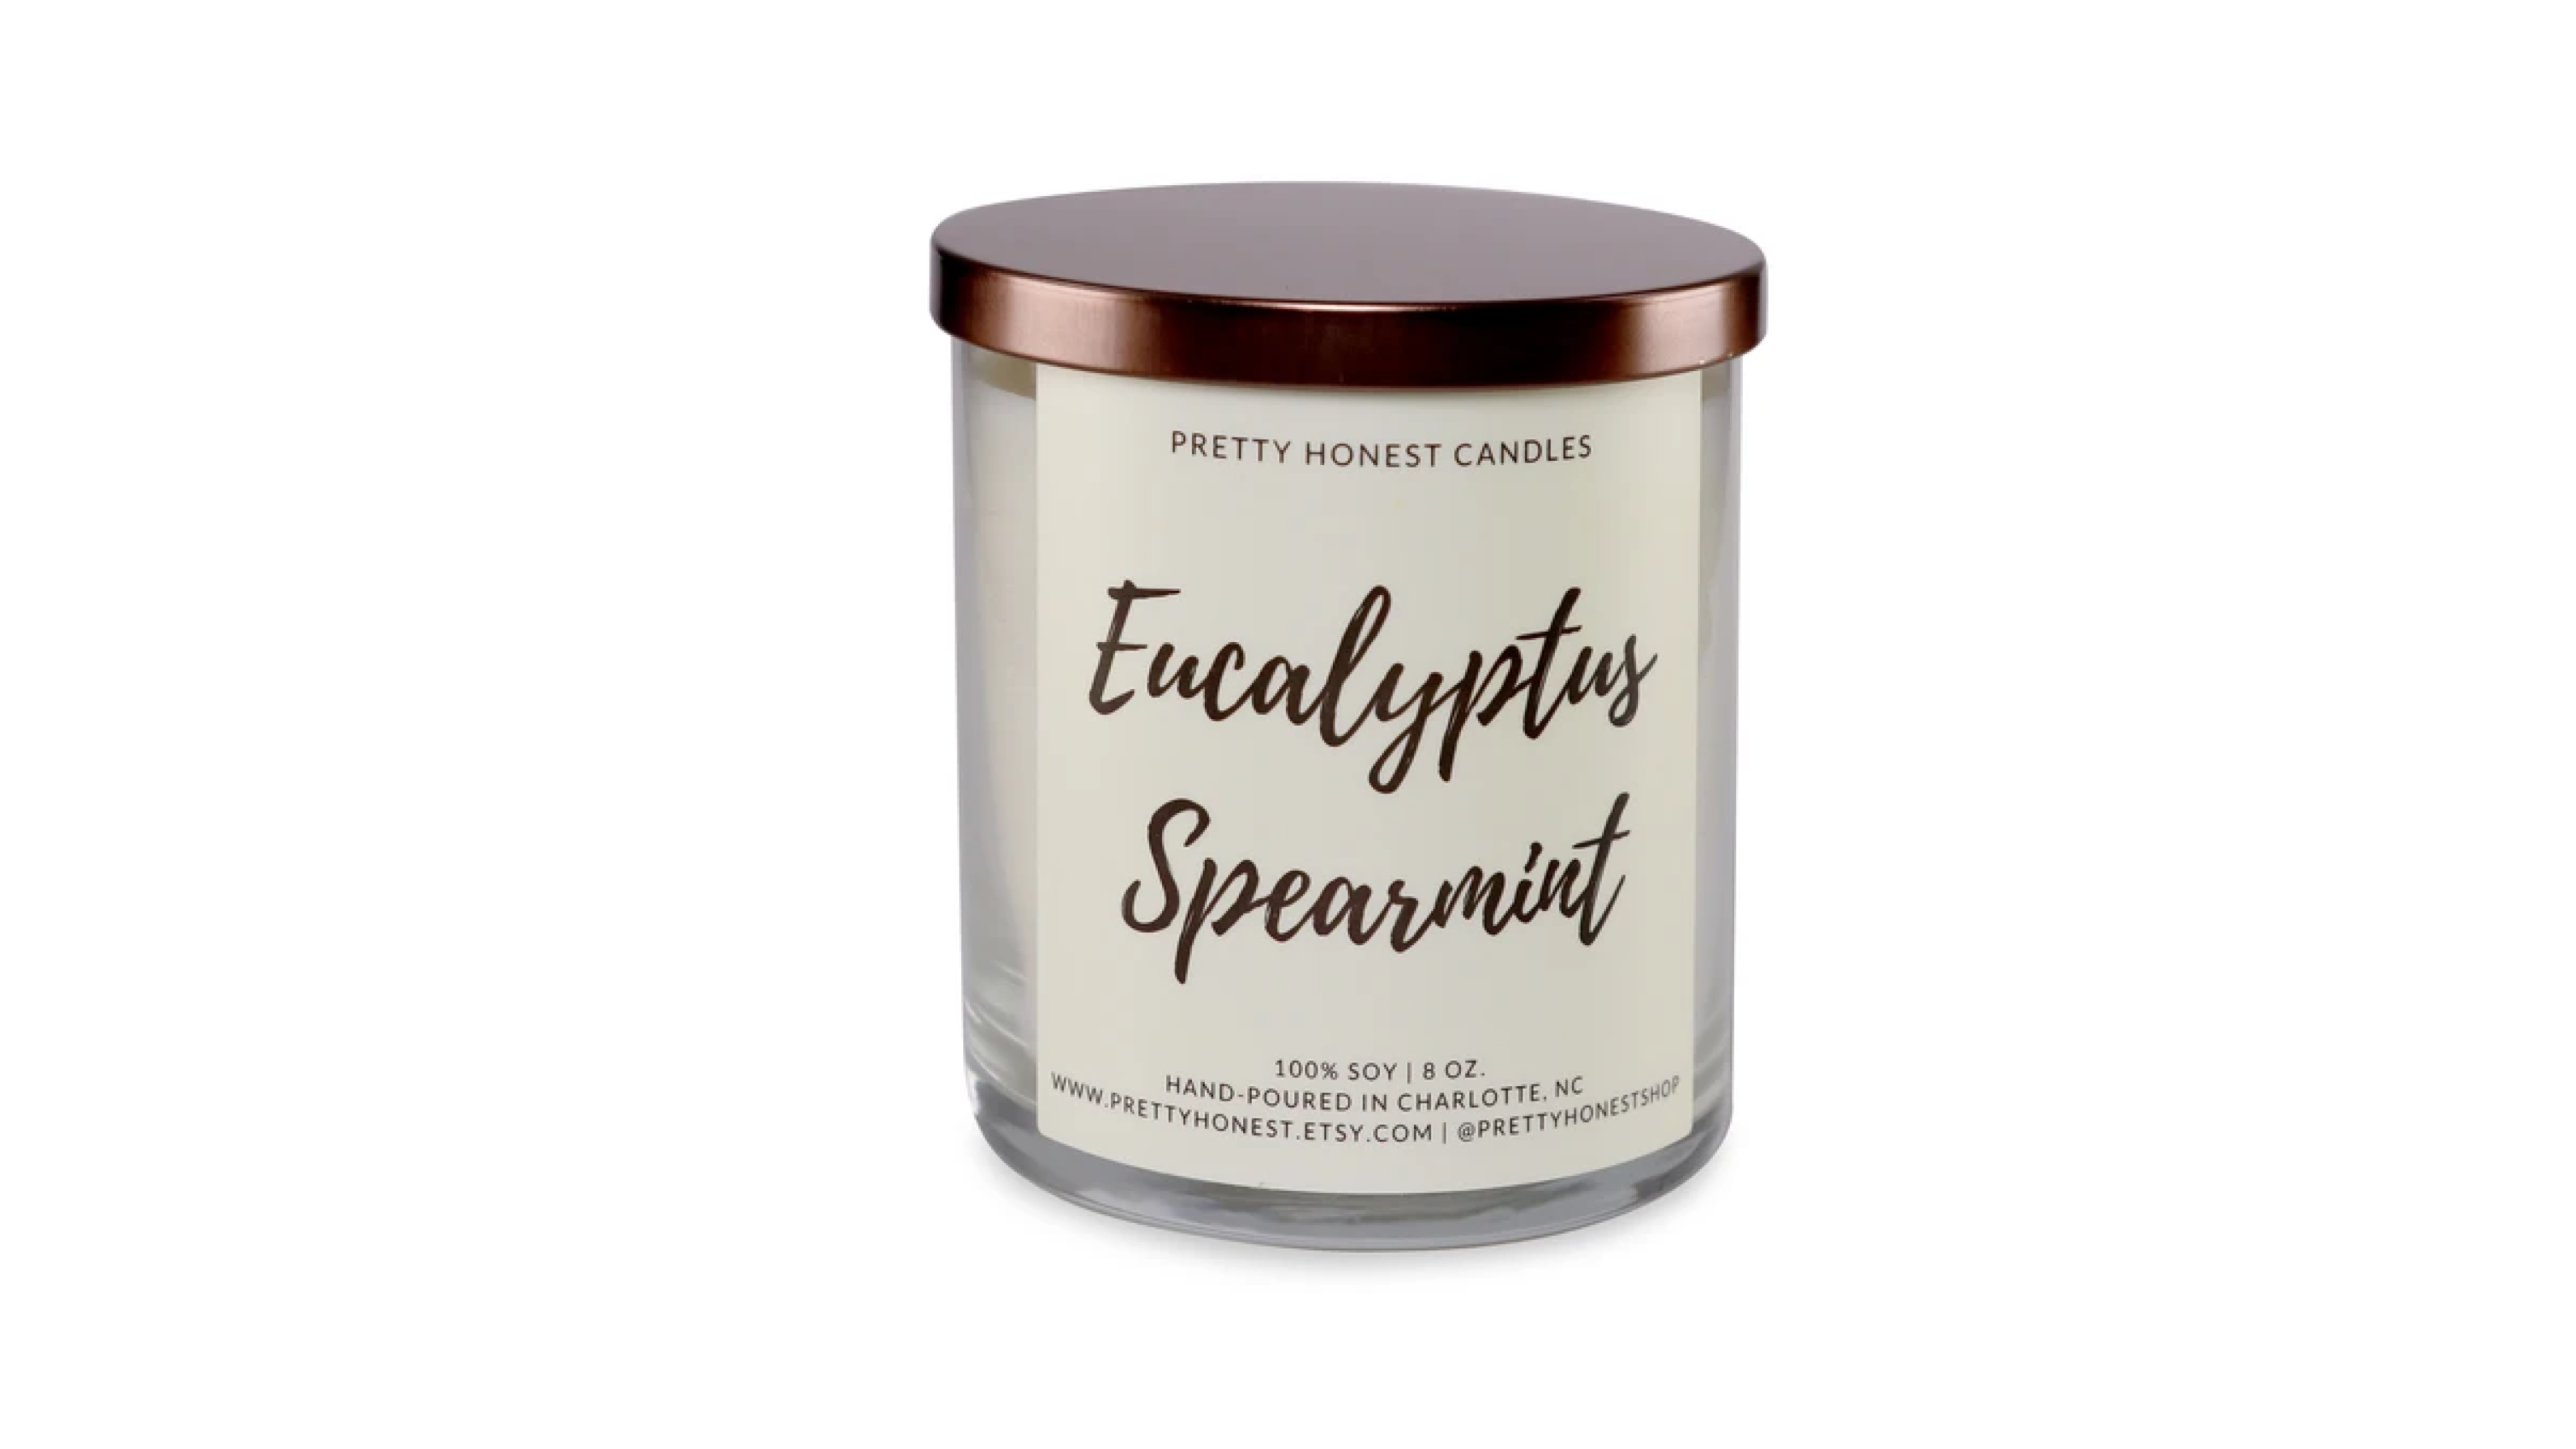 eucalyptus spearmint scented candle